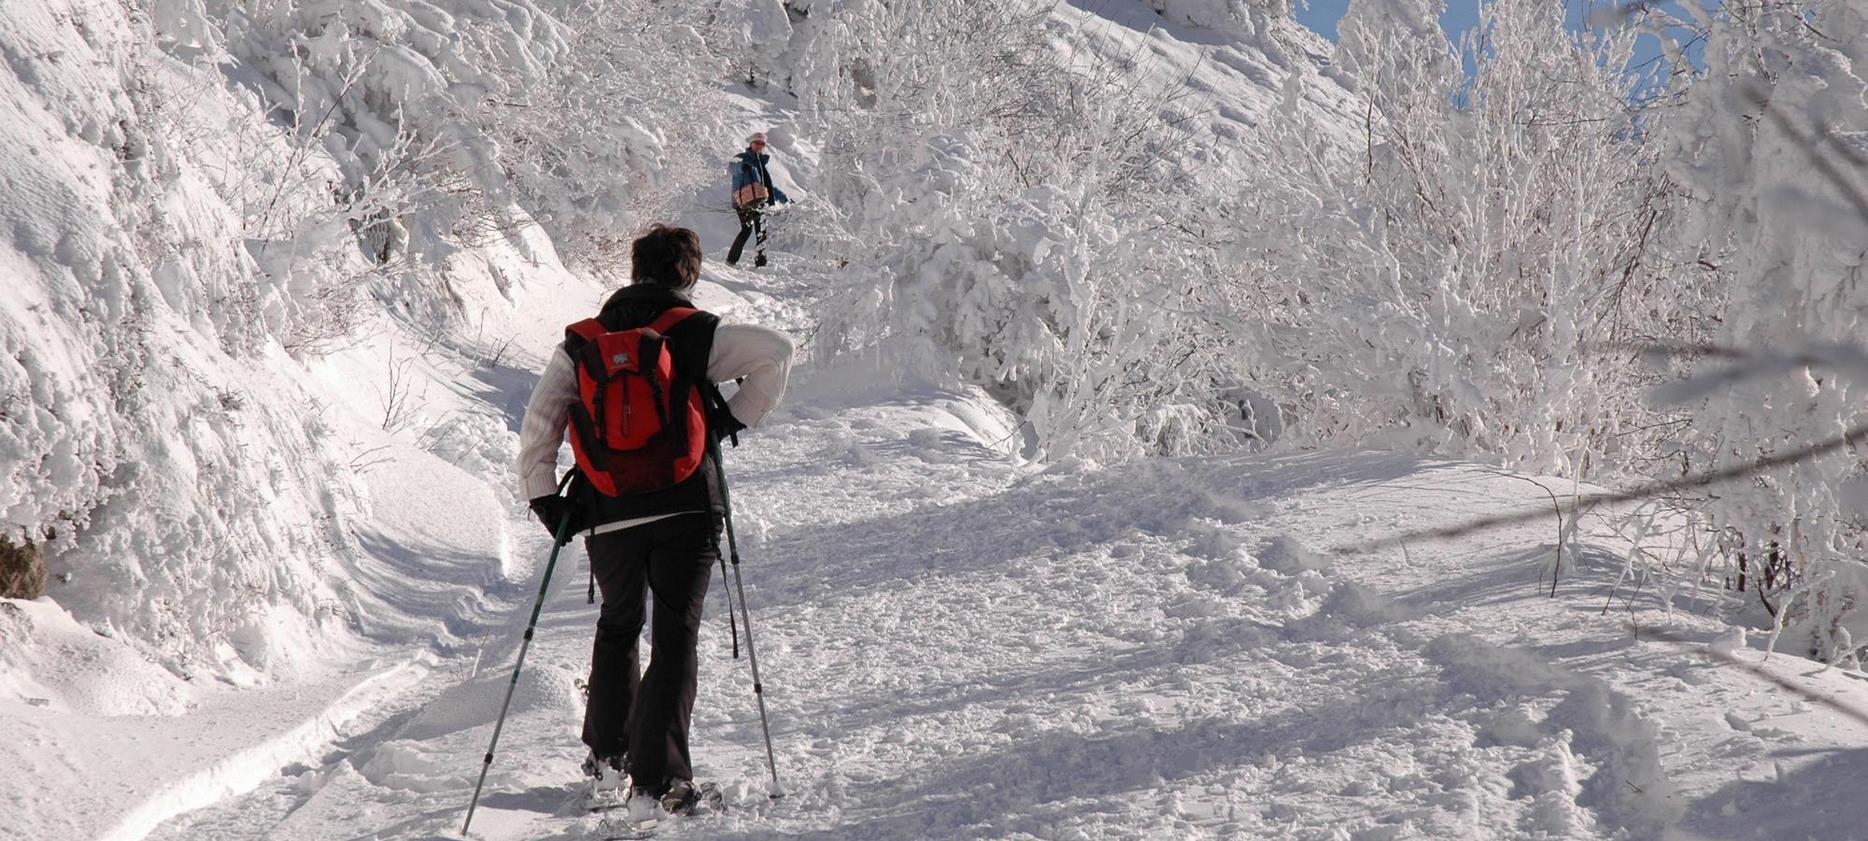 Super besse - Climb of the Puy de Dôme in the snow